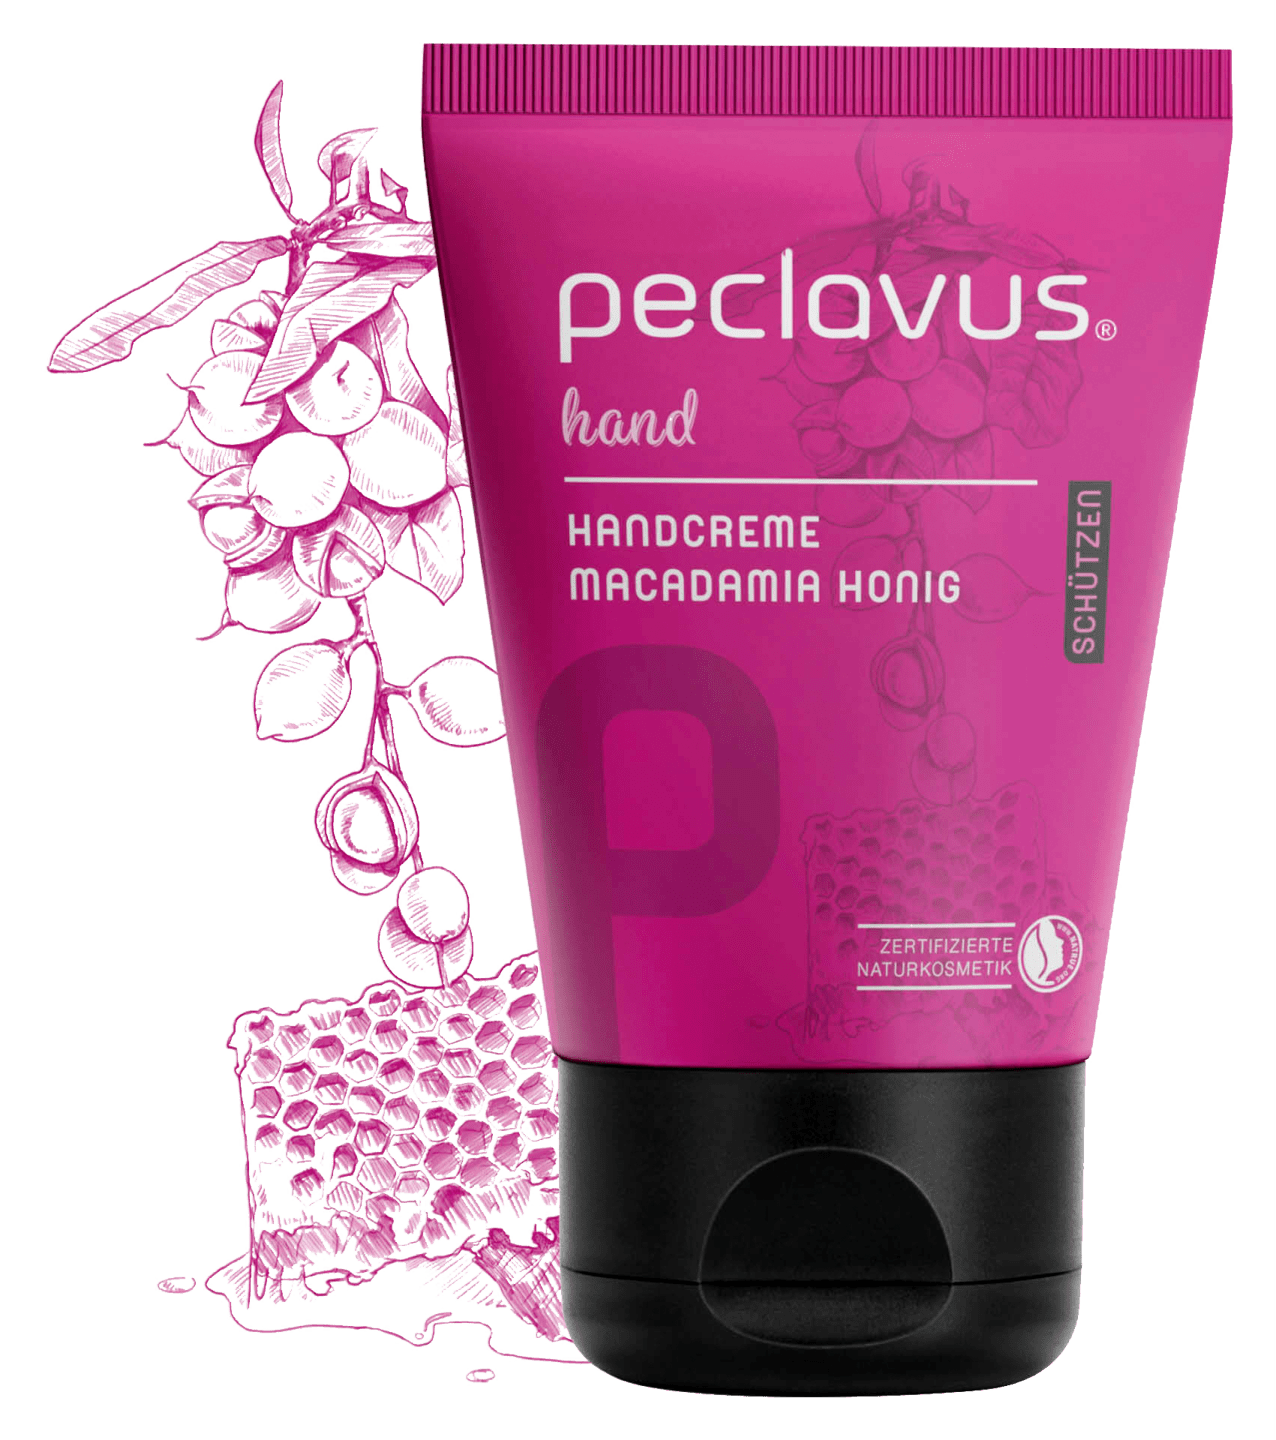 peclavus - Handcreme Macadamia Honig | Schützen, 30 ml